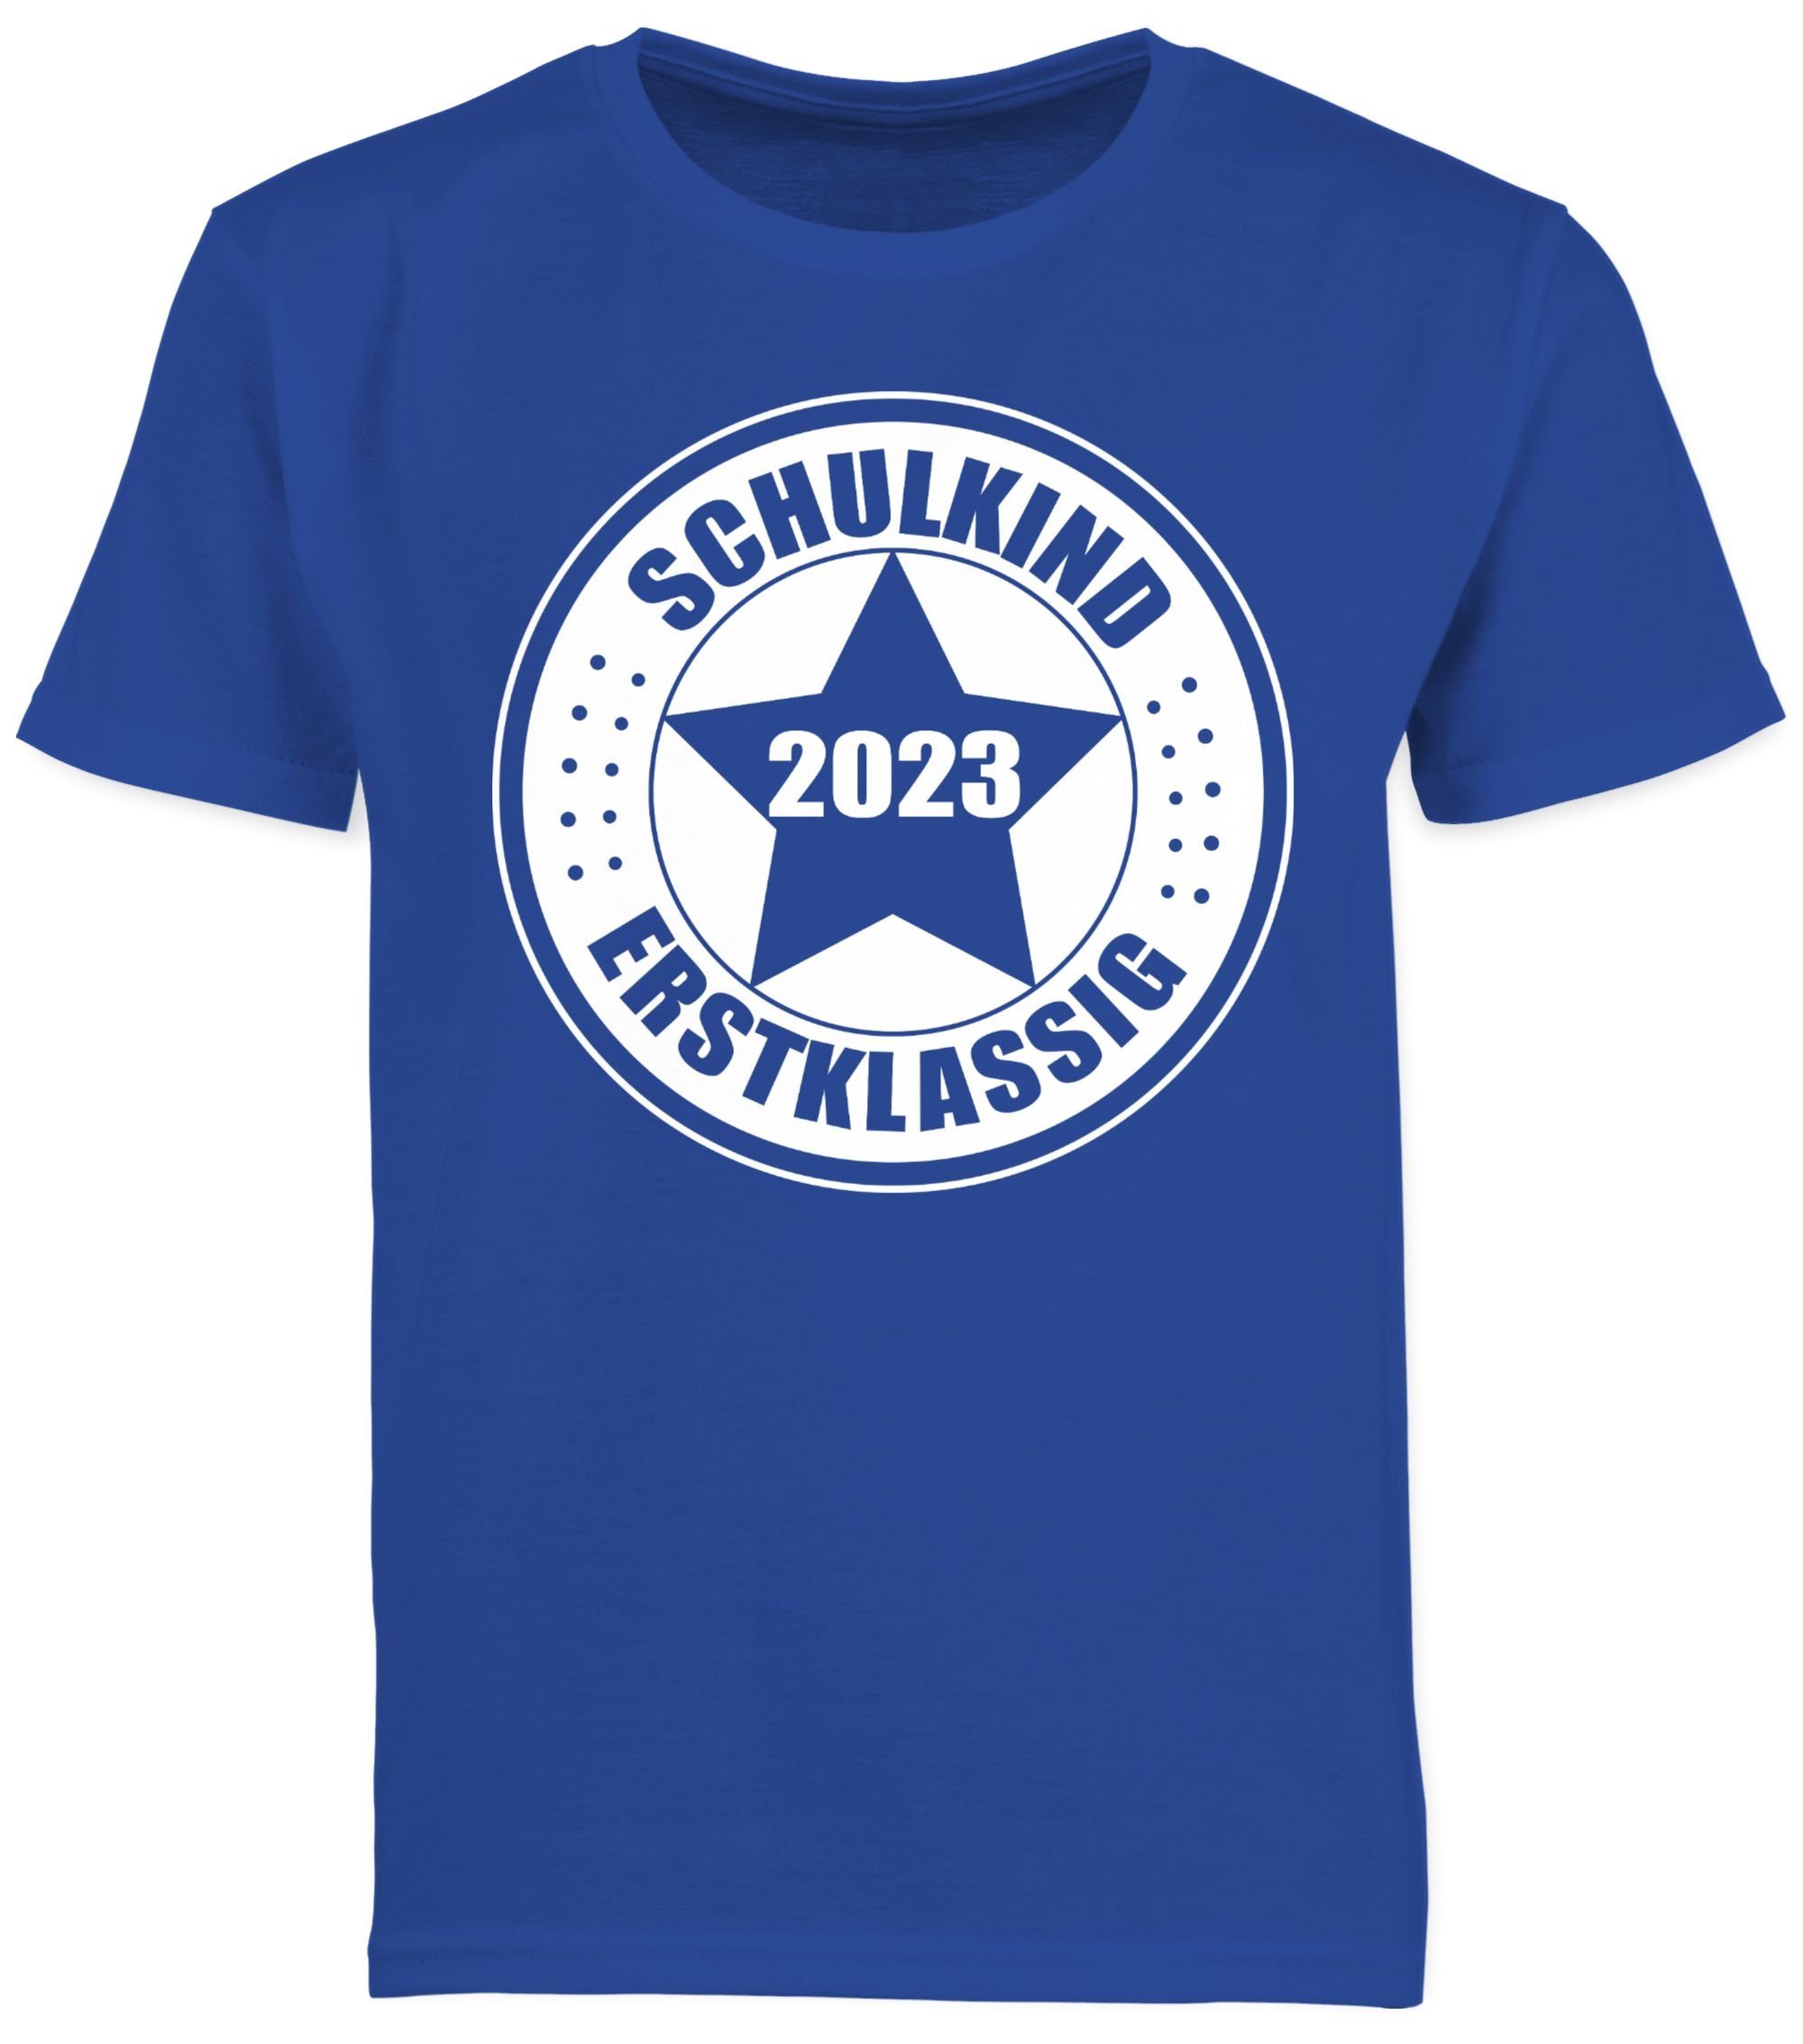 03 Geschenke - Shirtracer Junge T-Shirt Einschulung Royalblau Erstklassig Schulanfang 2023 Schulkind